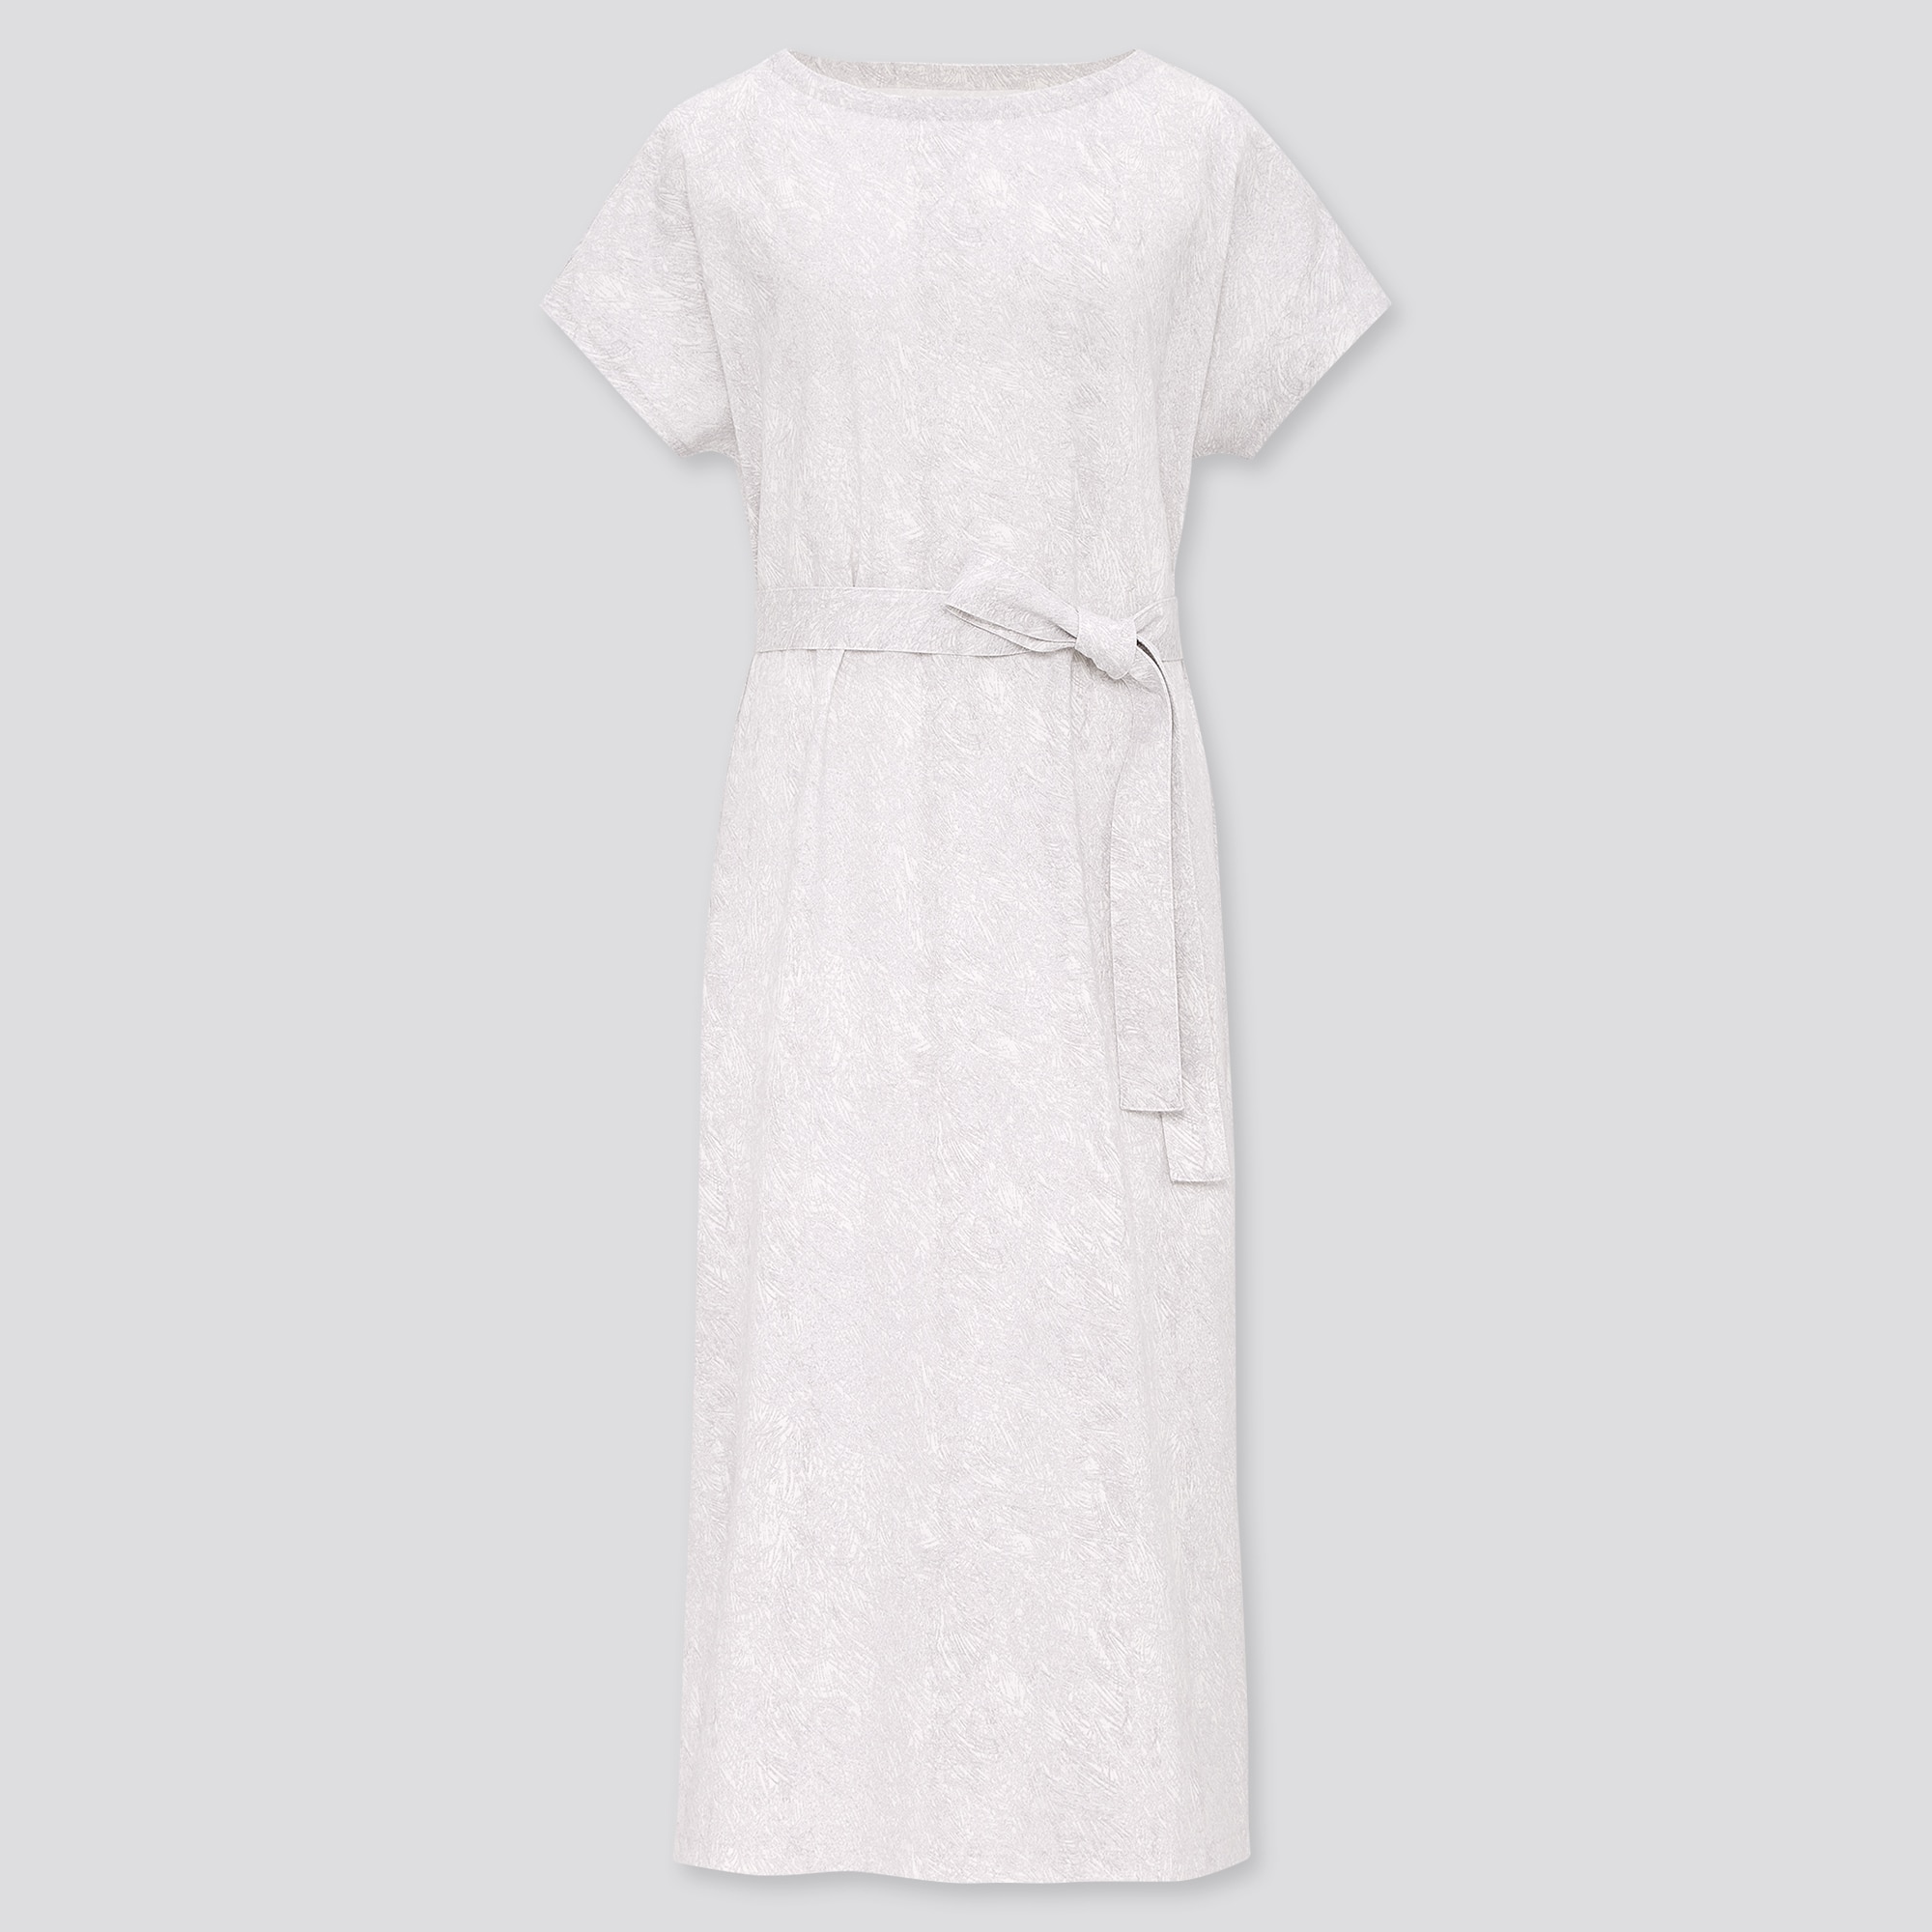 dress white dress